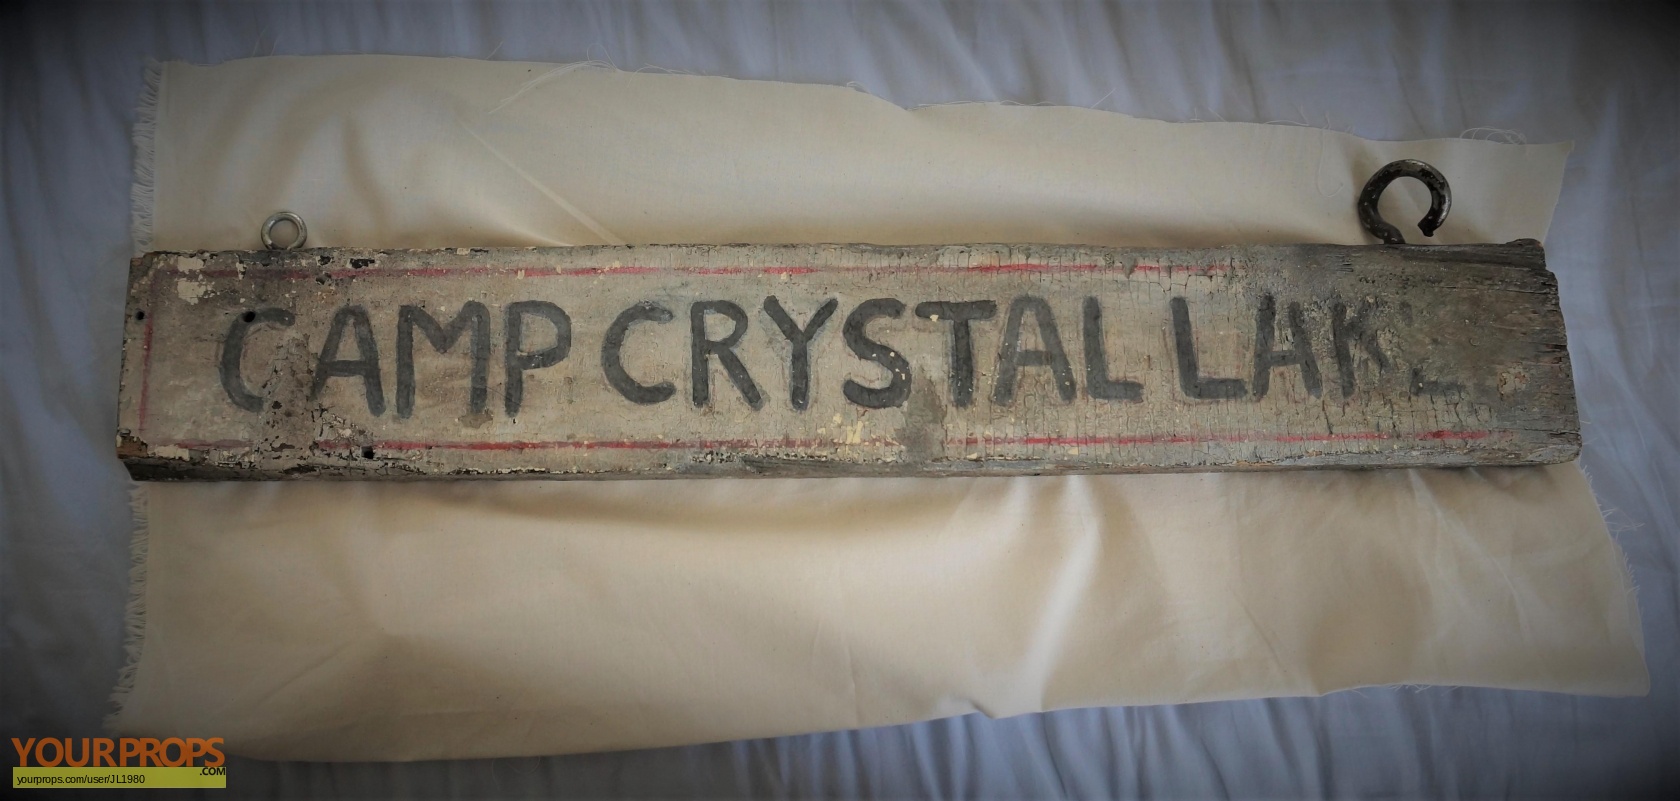 Friday the 13th, Part 2 Camp Crystal Lake sign original set dressing